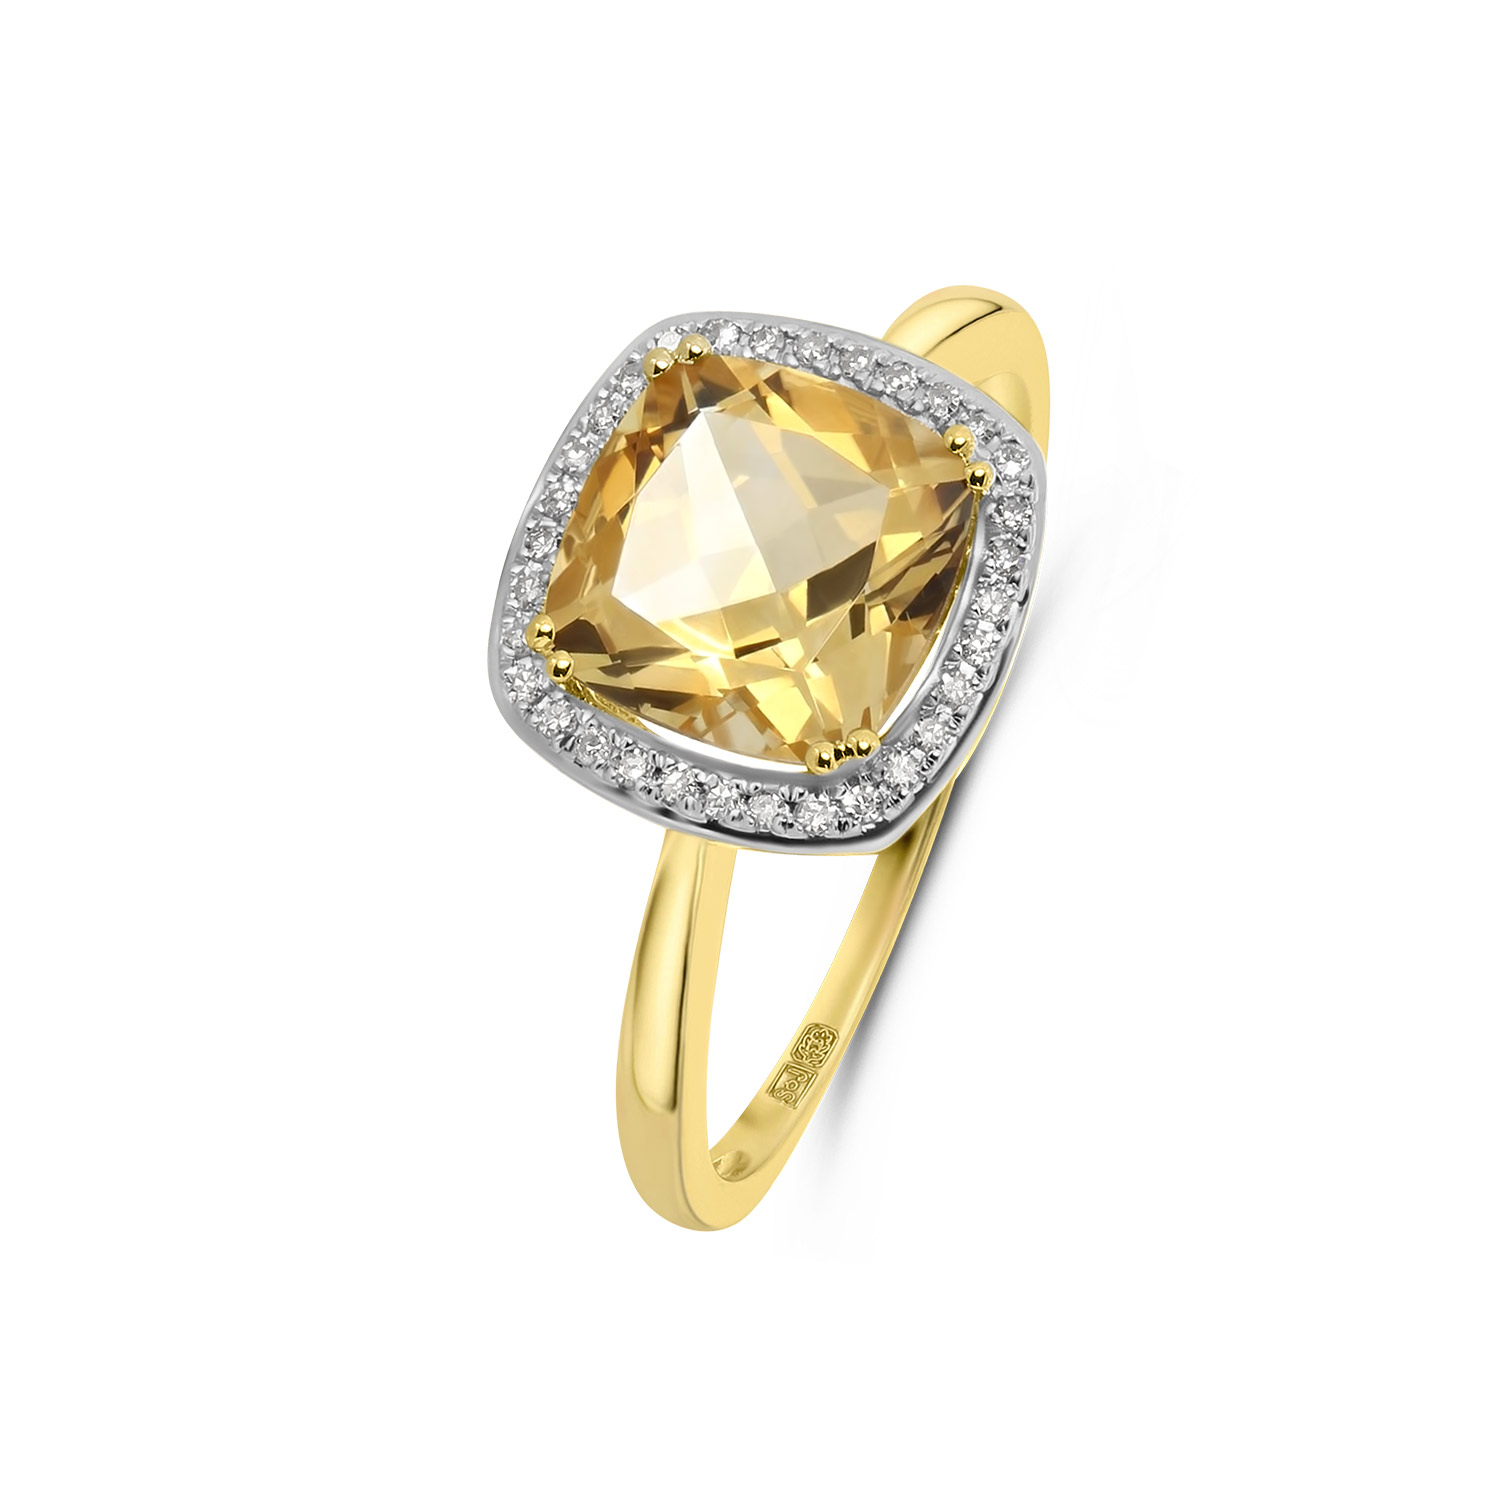 Geelgouden ring met citrien en diamanten entourage R382-R304357ACIT14KYW-Y